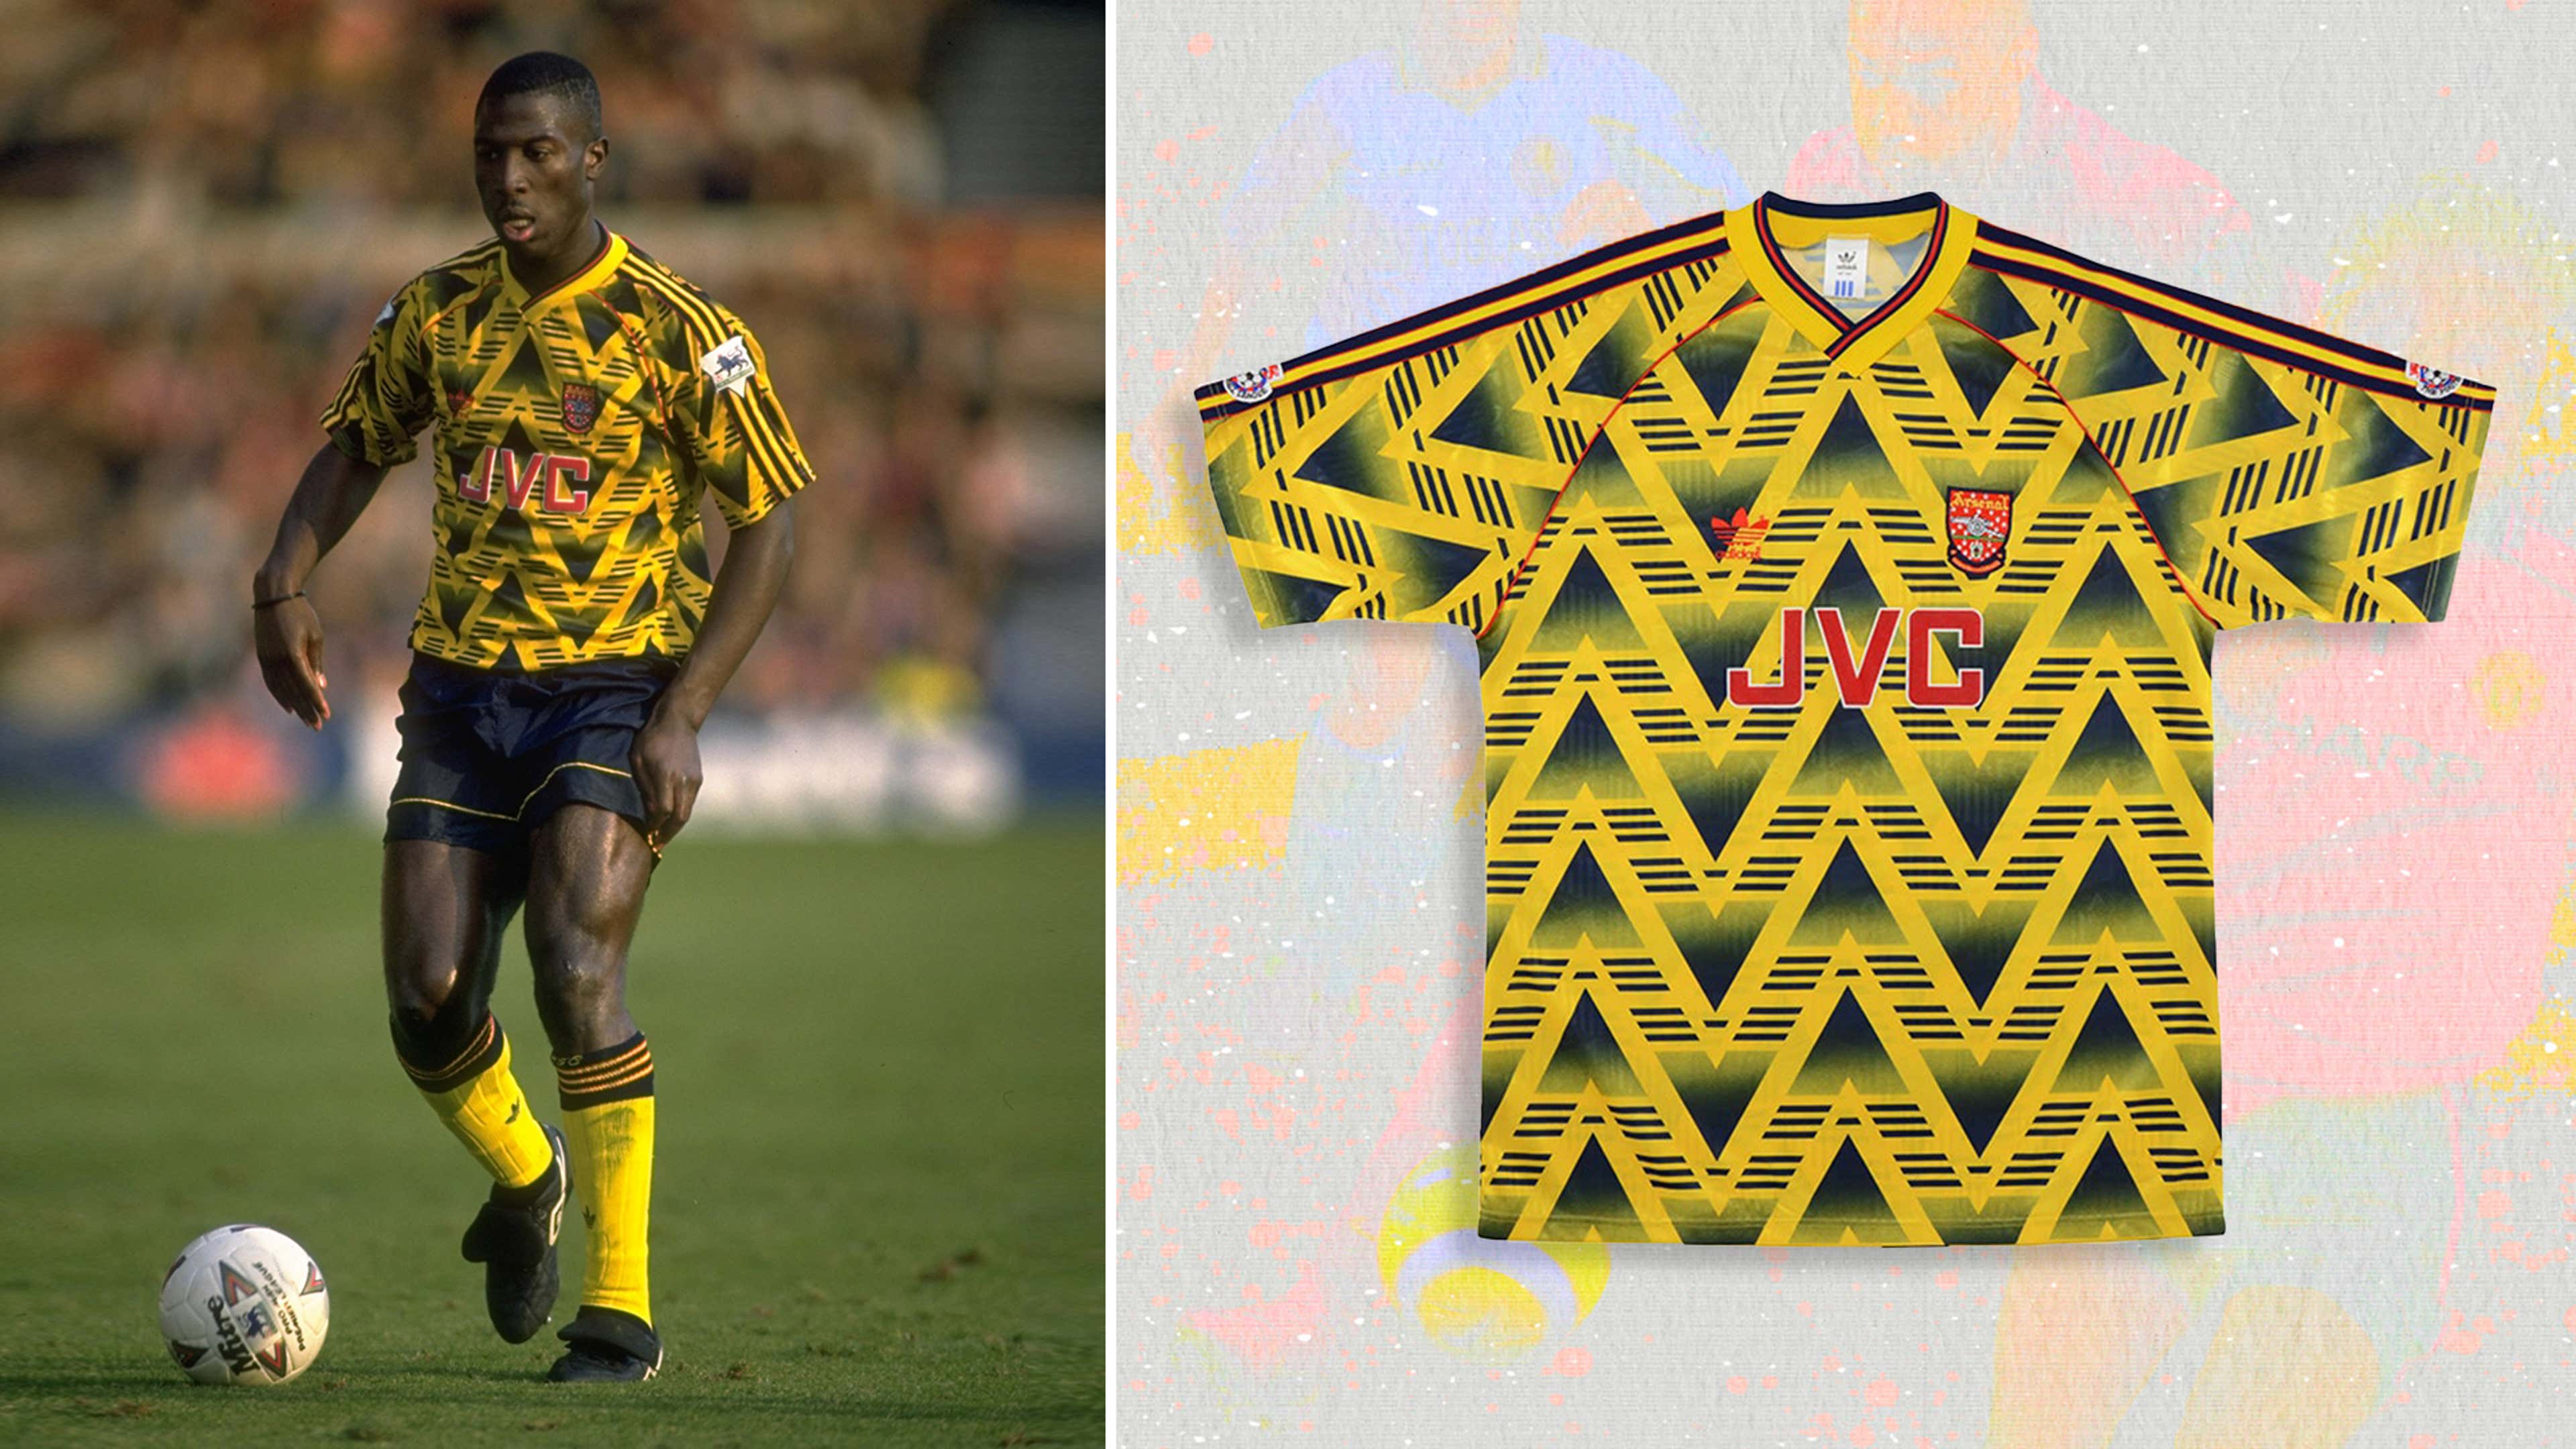 1990/91 Man Utd Away Football Shirt / Old Vintage Umbro Soccer Jersey